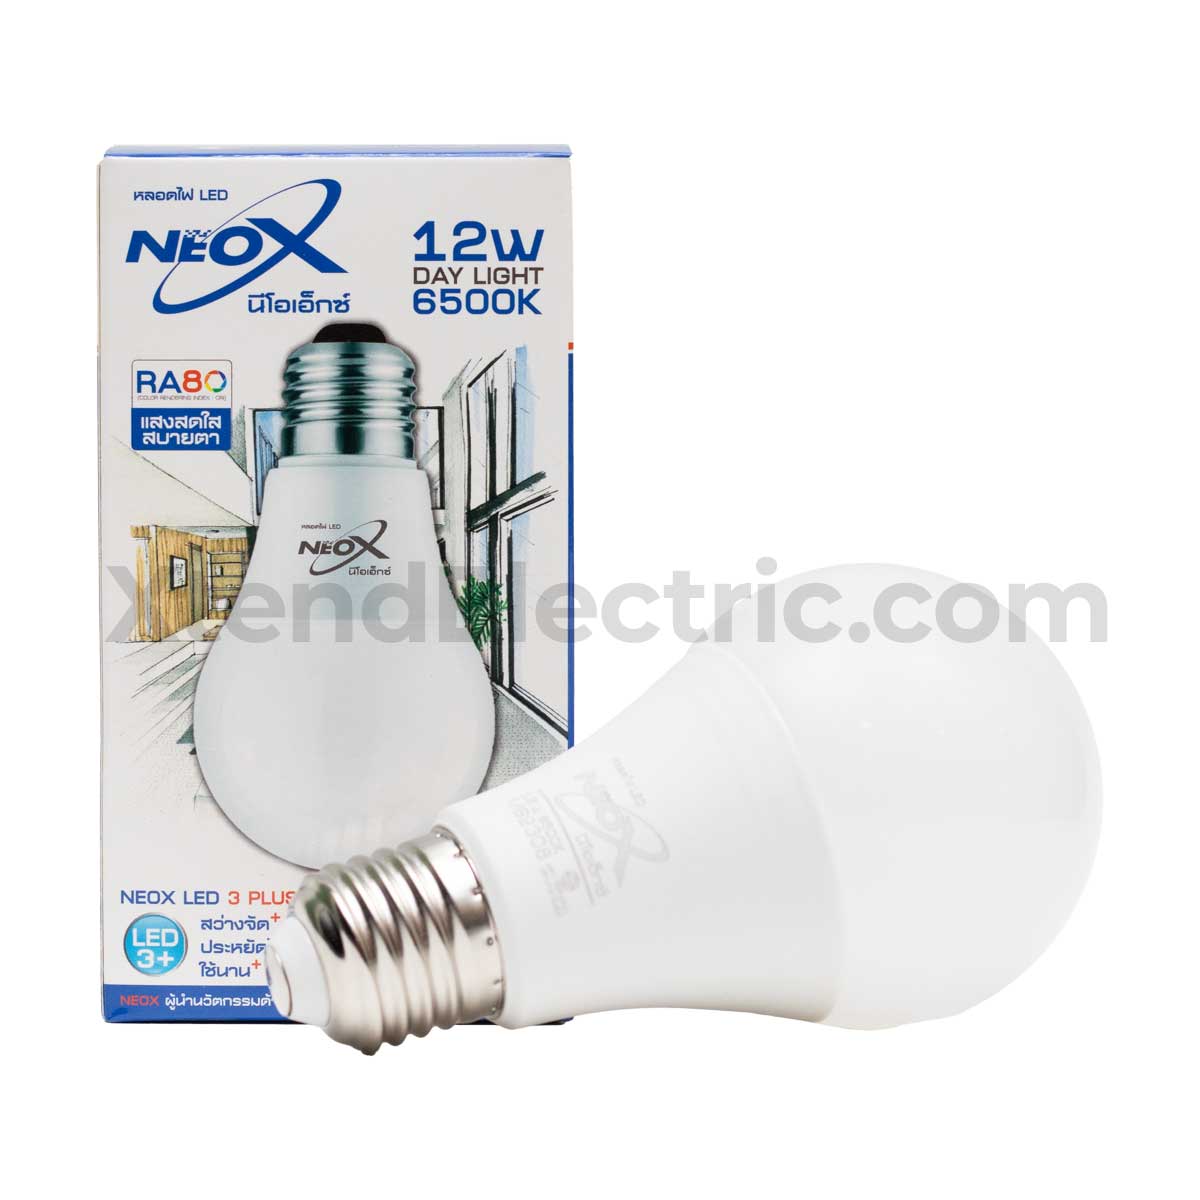 Neox-LED-12w-DL-01